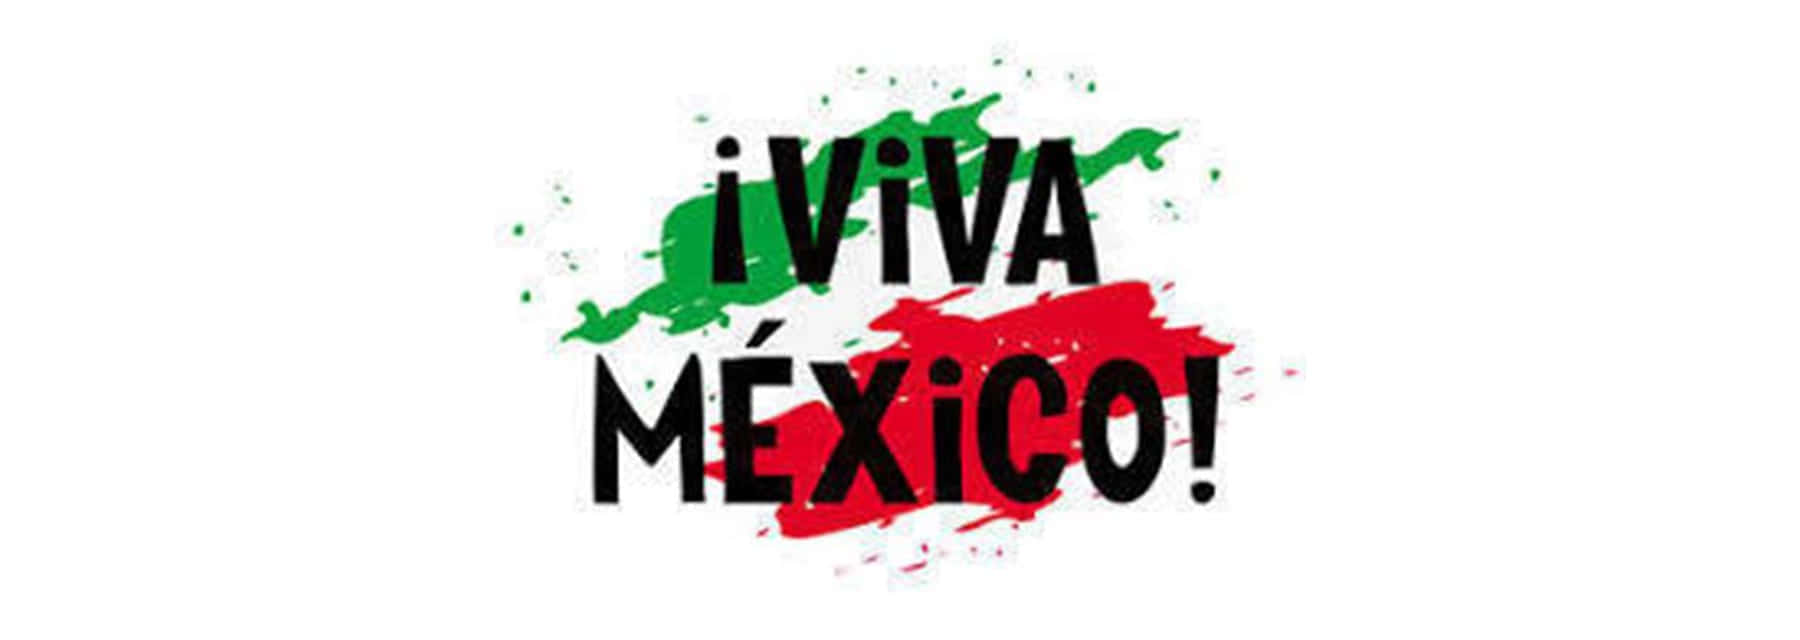 Celebrate With Viva Mexico! Wallpaper